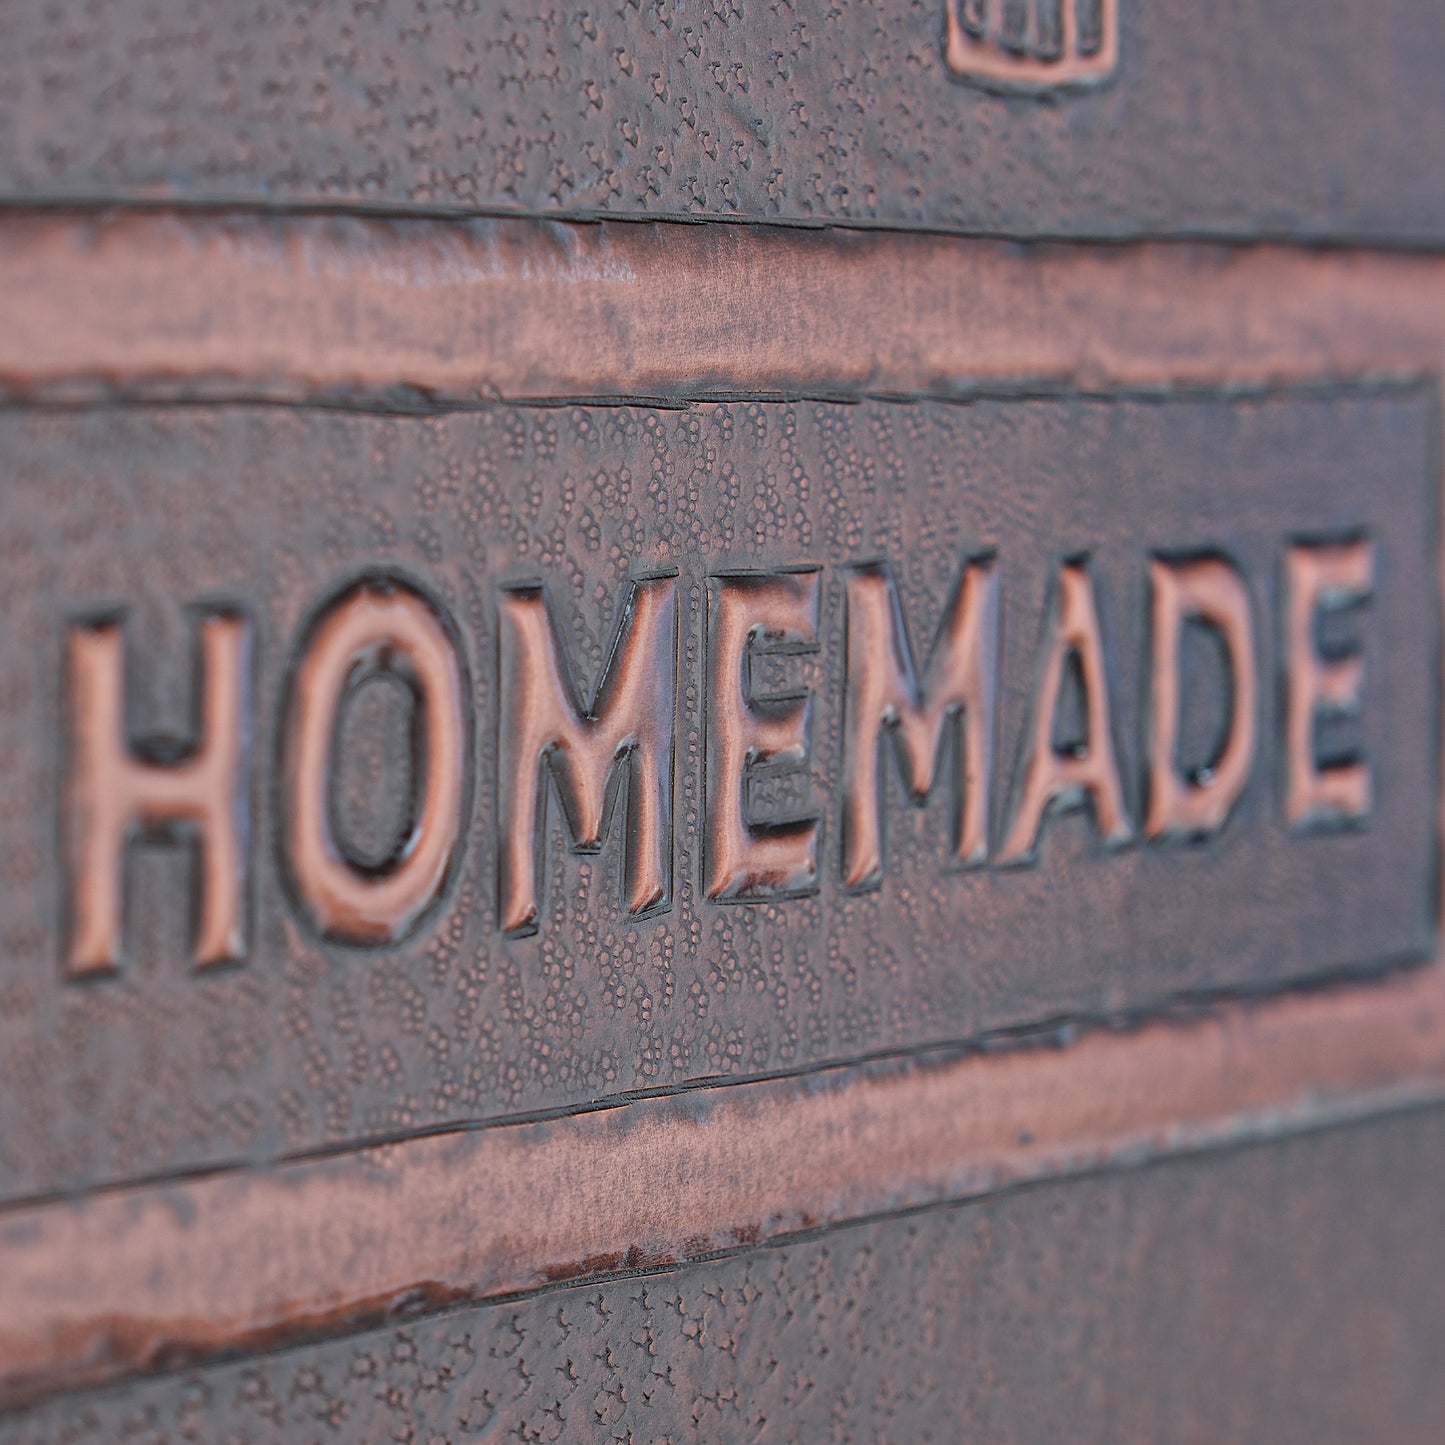 "Happiness is Homemade" Kitchen Backsplash Tile - 18x24 Brown